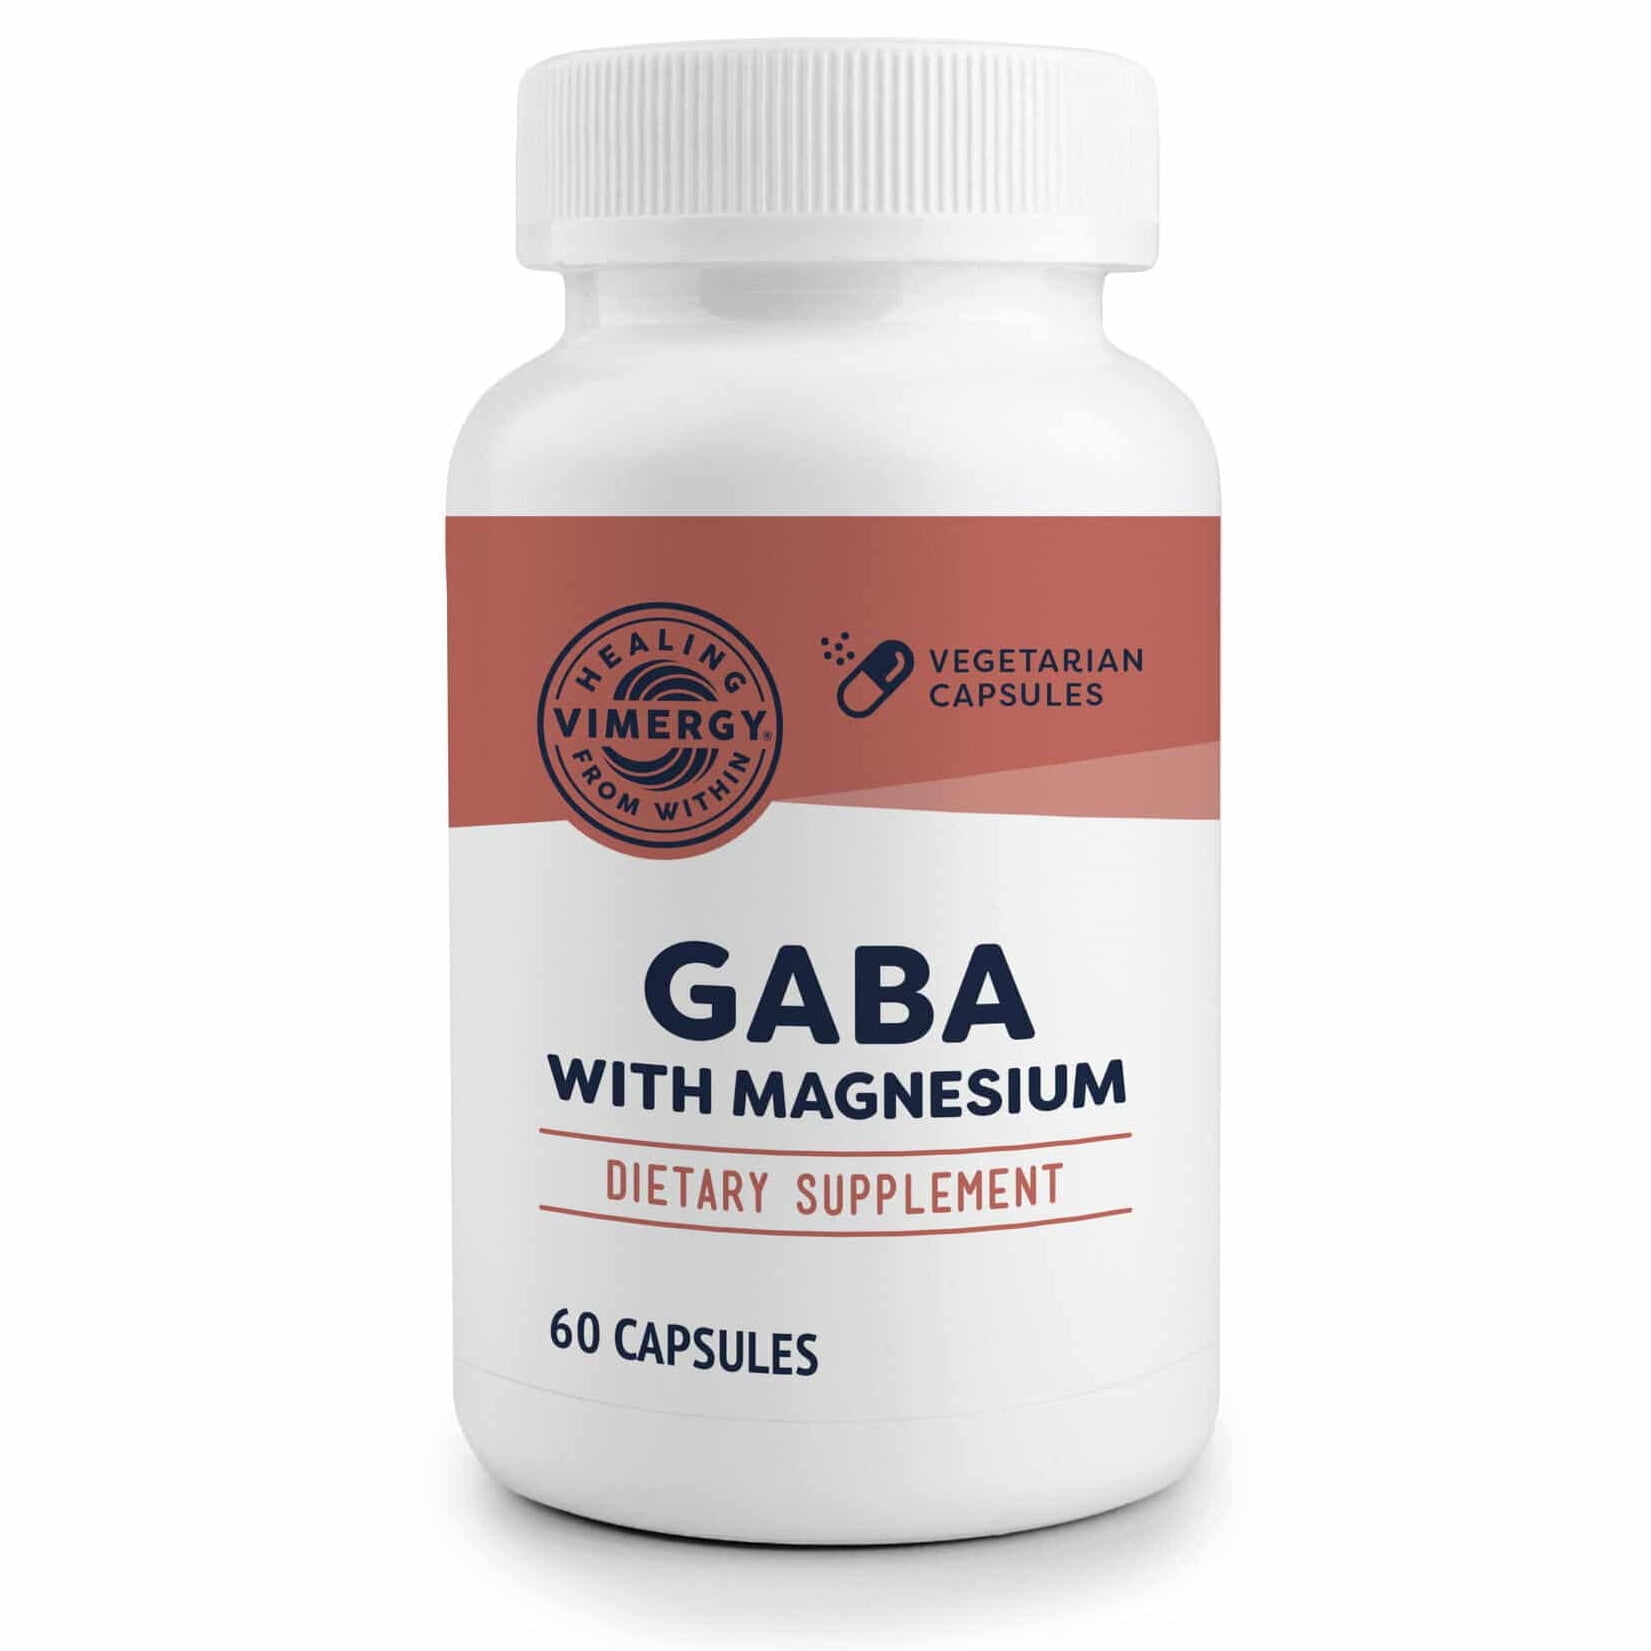 Vimergy Gaba magnesium